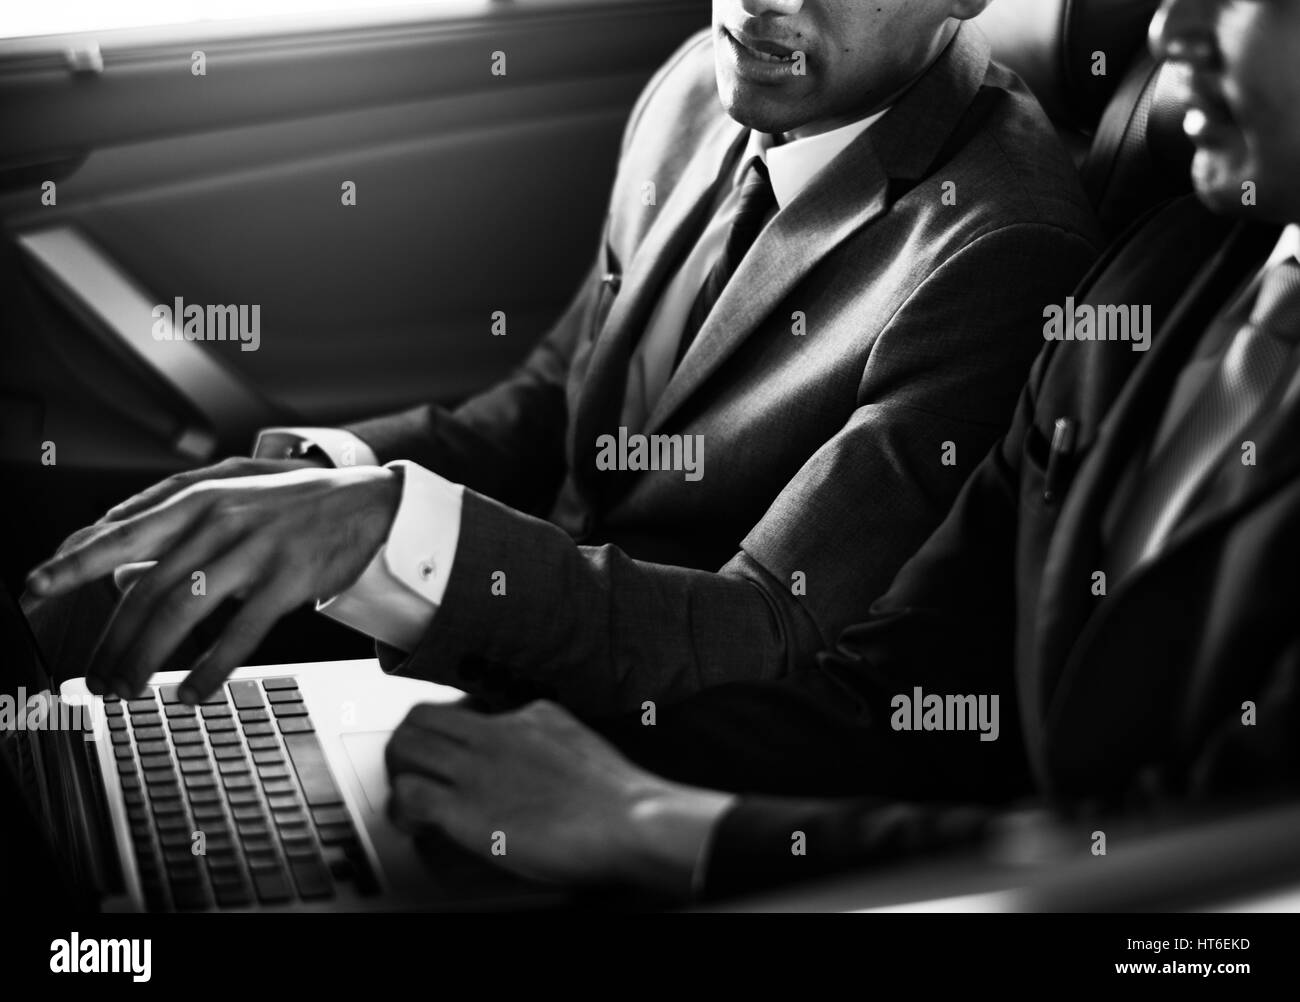 Business Men Use Laptop Car Stock Photo